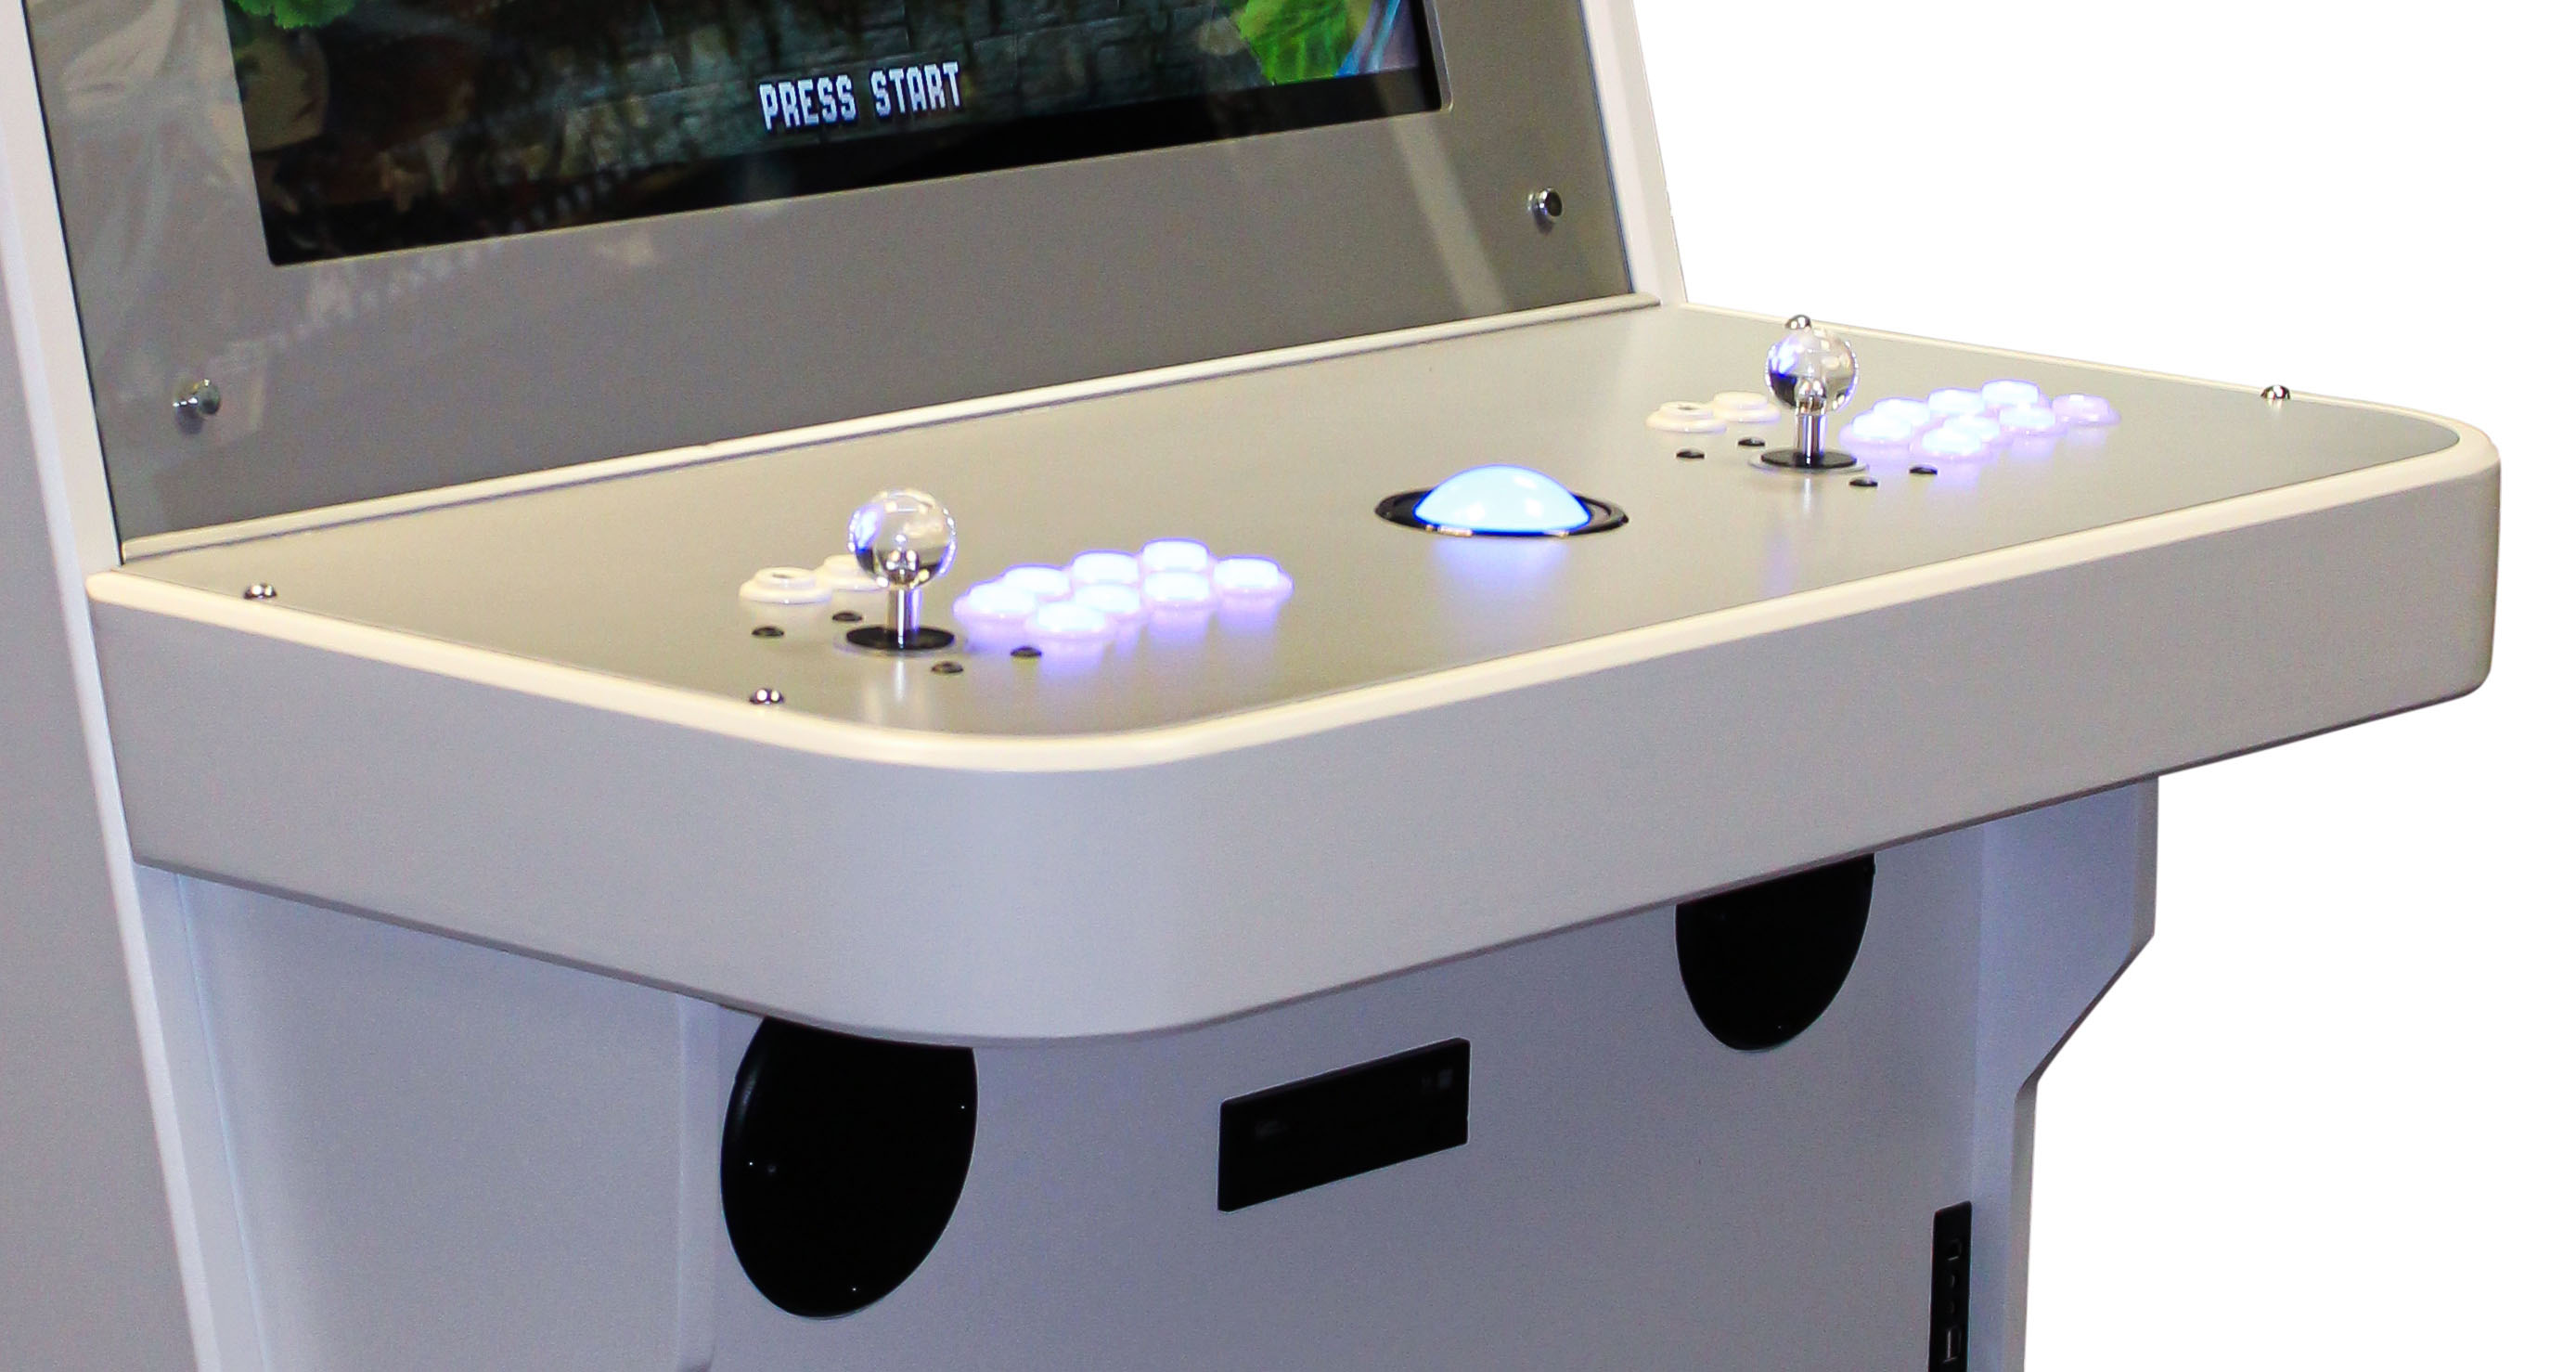 nu-gen-arcade-machine-white-finish-illuminated-buttons-panel.jpg